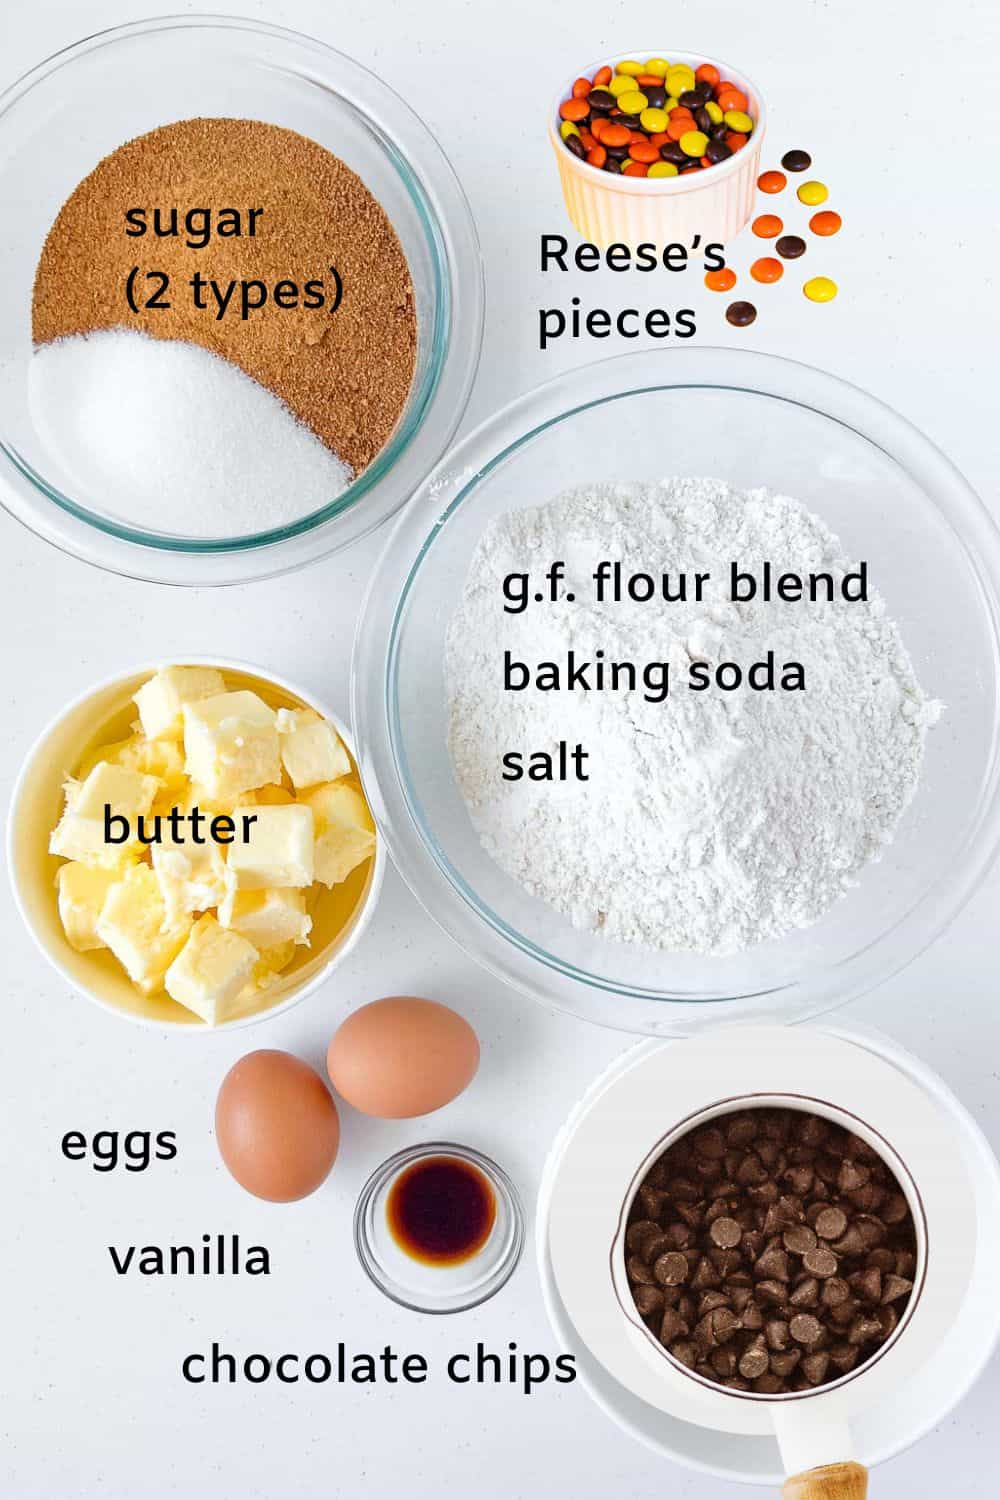 Labelled ingredients for gluten-free Halloween Reese's Pieces chocolate chip cookies: sugar, butter, eggs, vanilla, gluten-free flour, baking soda, sea salt, chocolate chips, Reese's pieces.